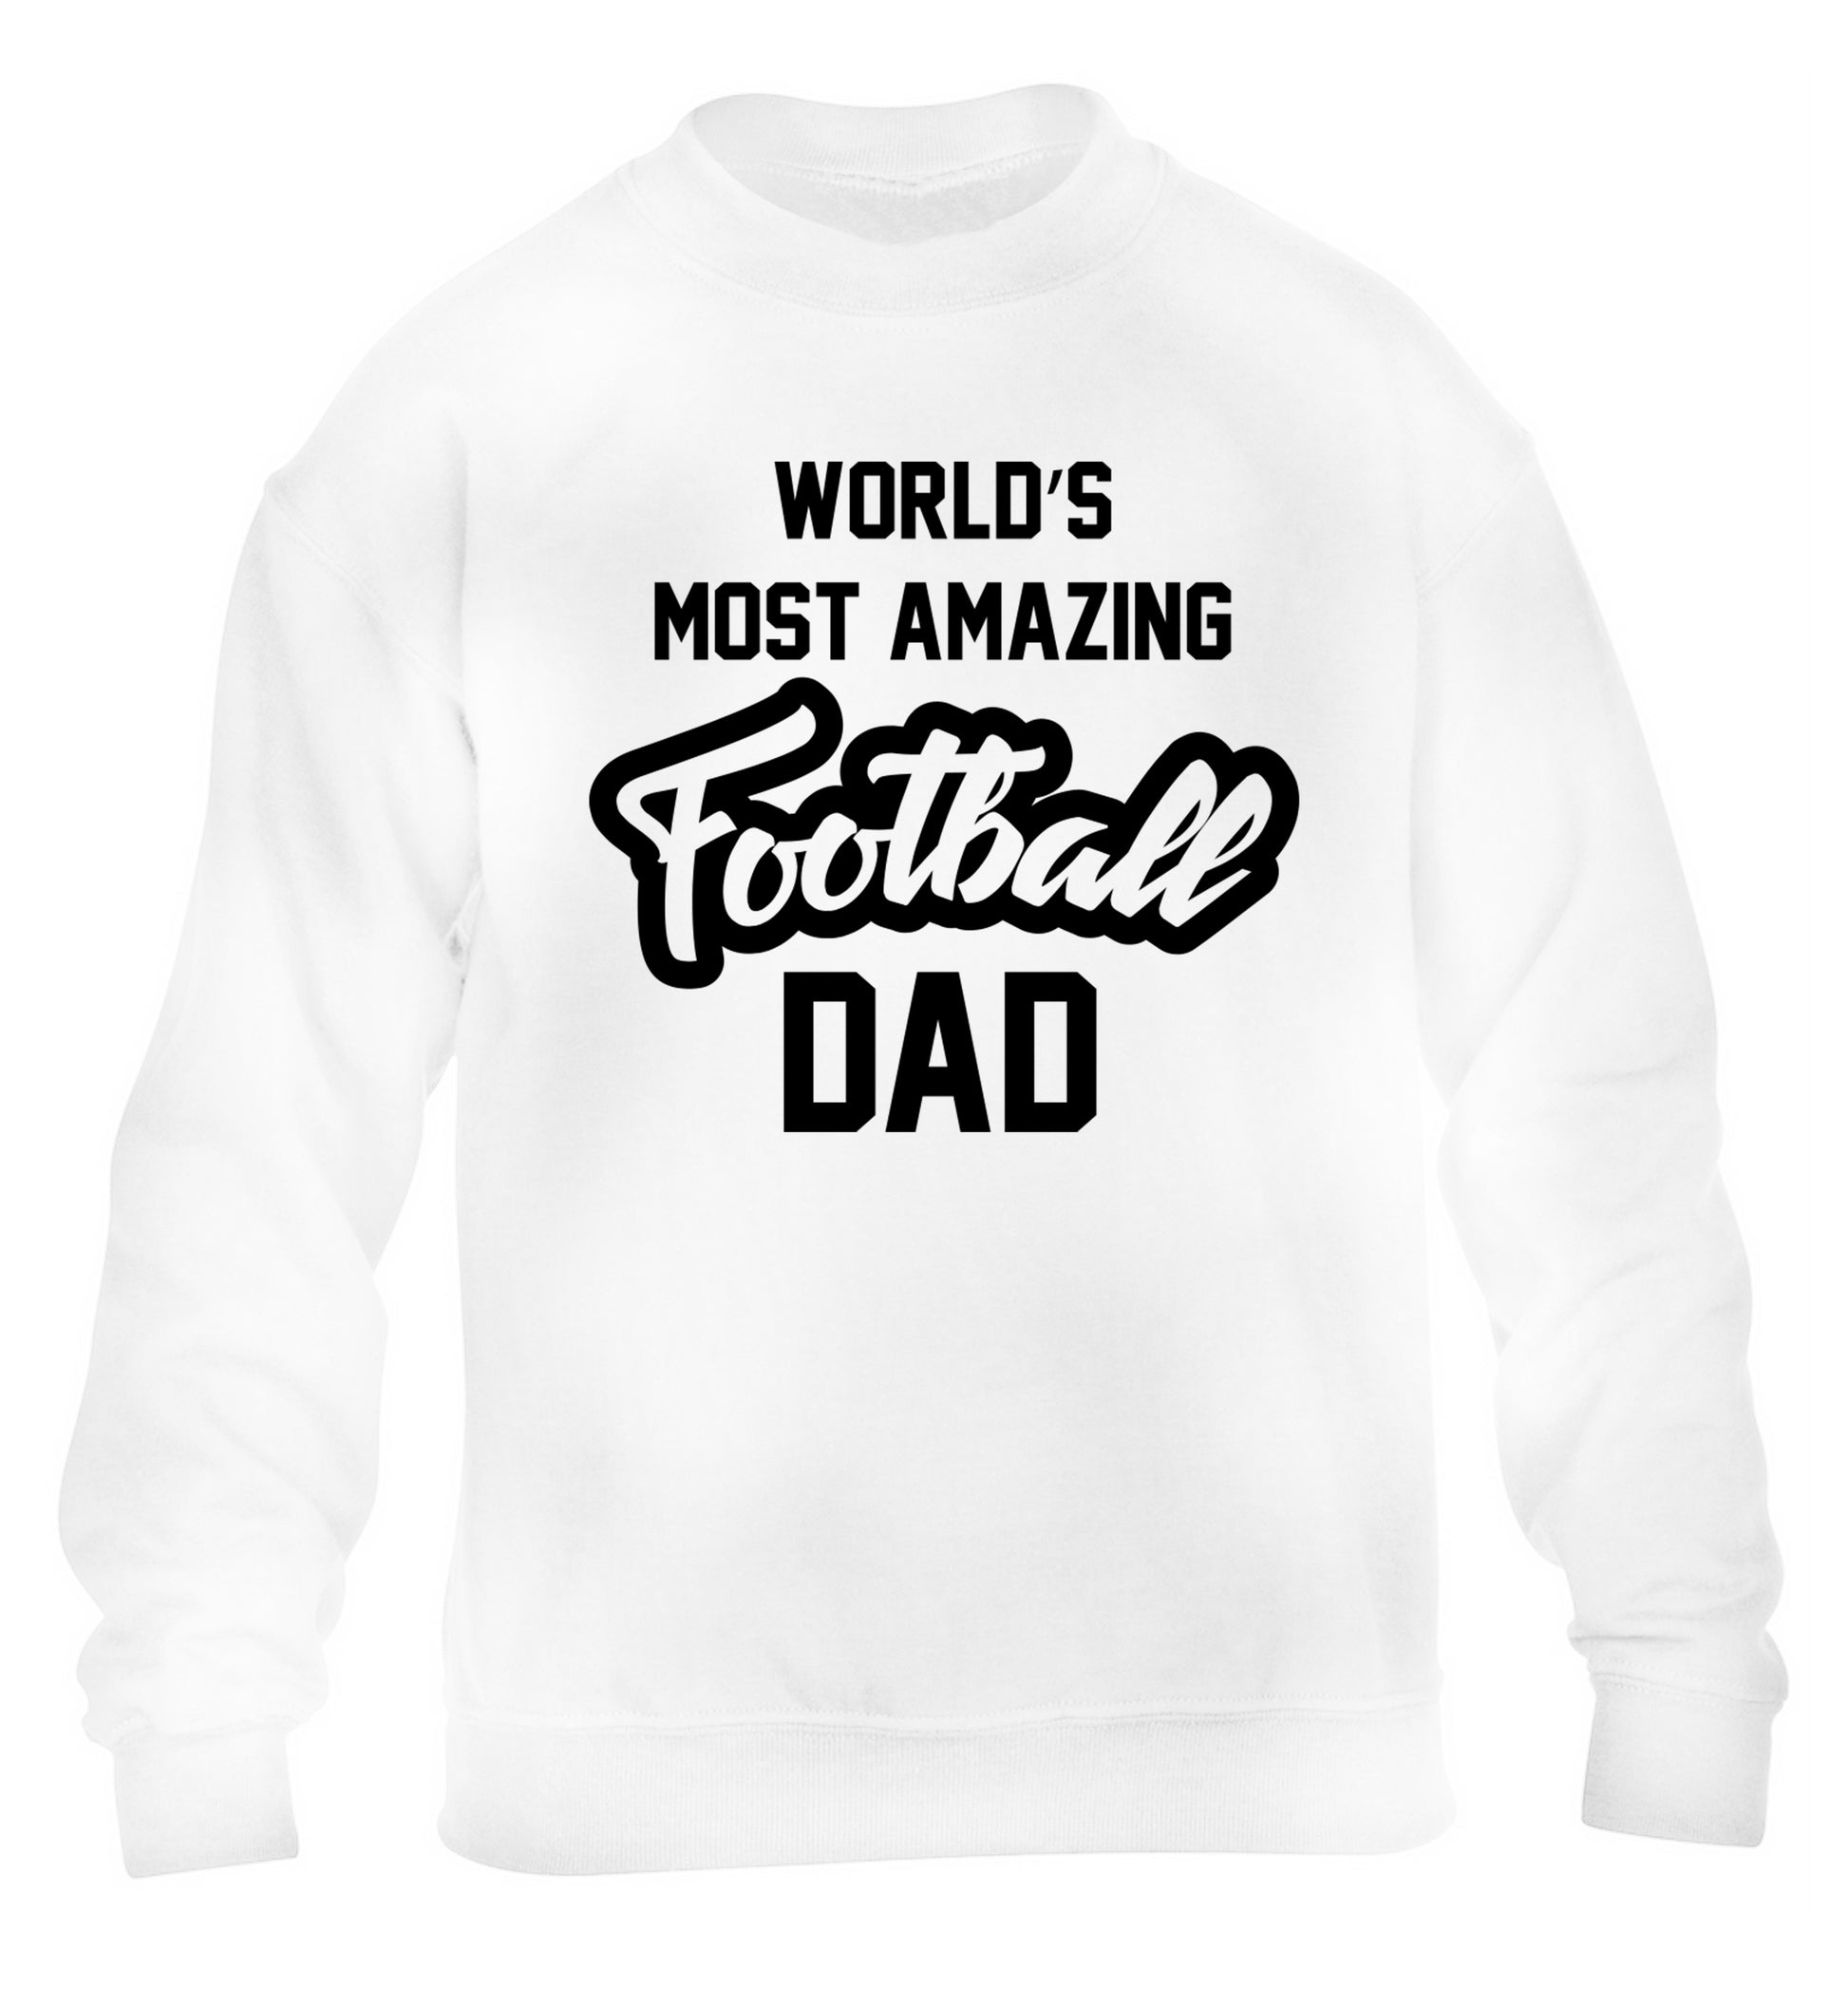 Worlds most amazing football dad children's white sweater 12-14 Years